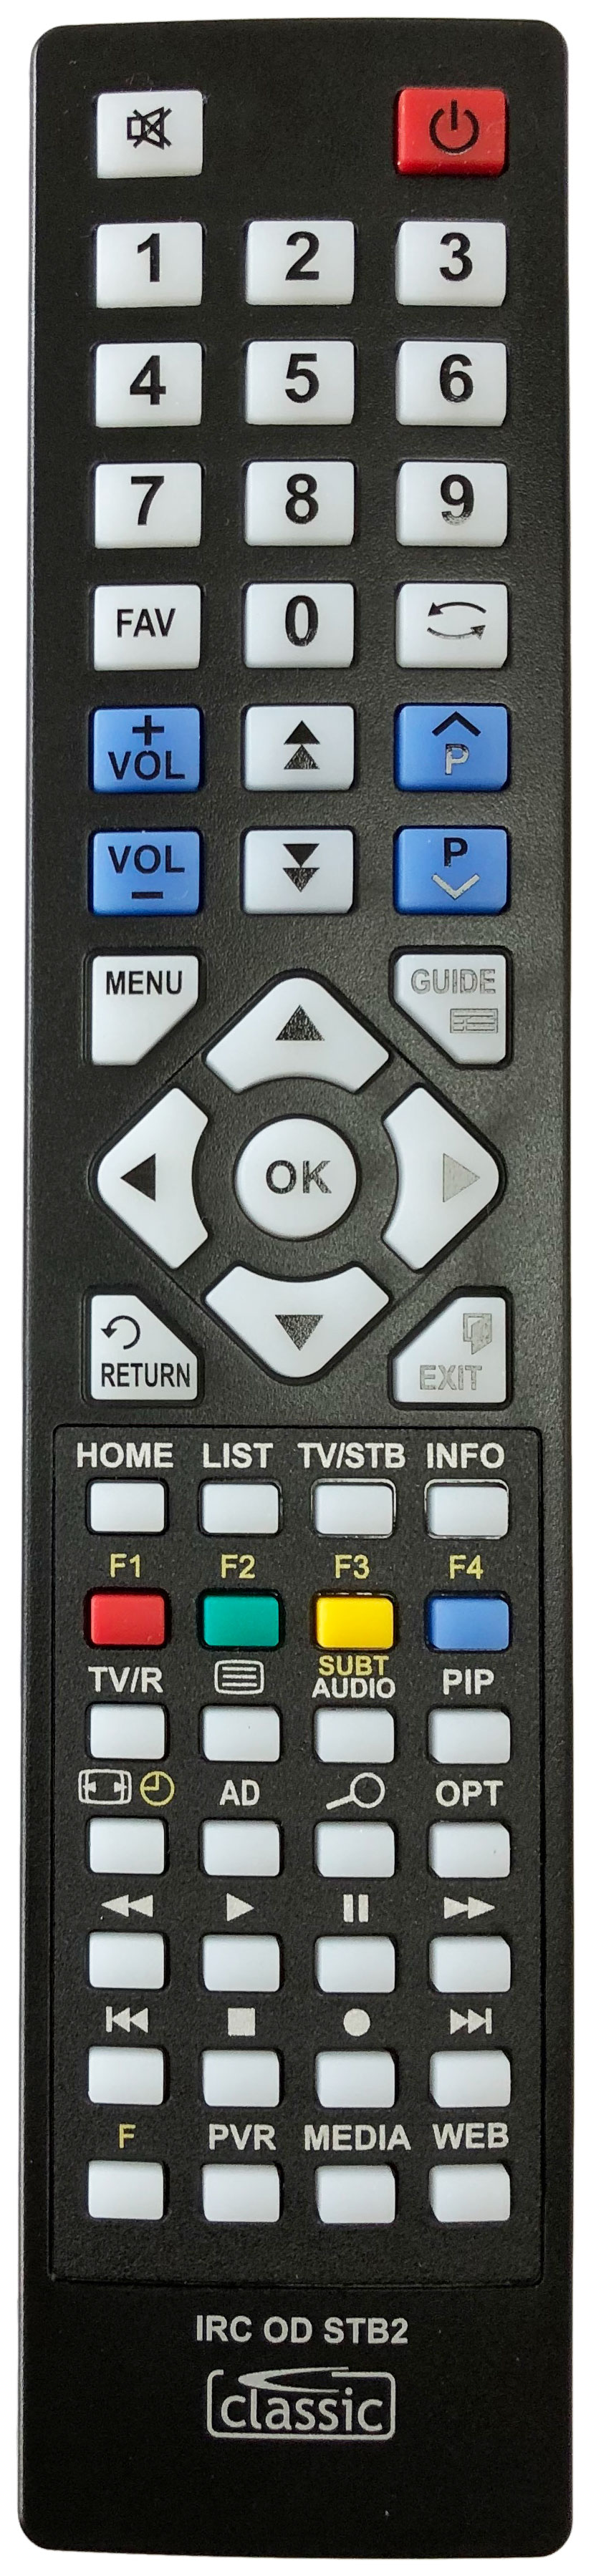 AKURA AMTDT3505 Remote Control